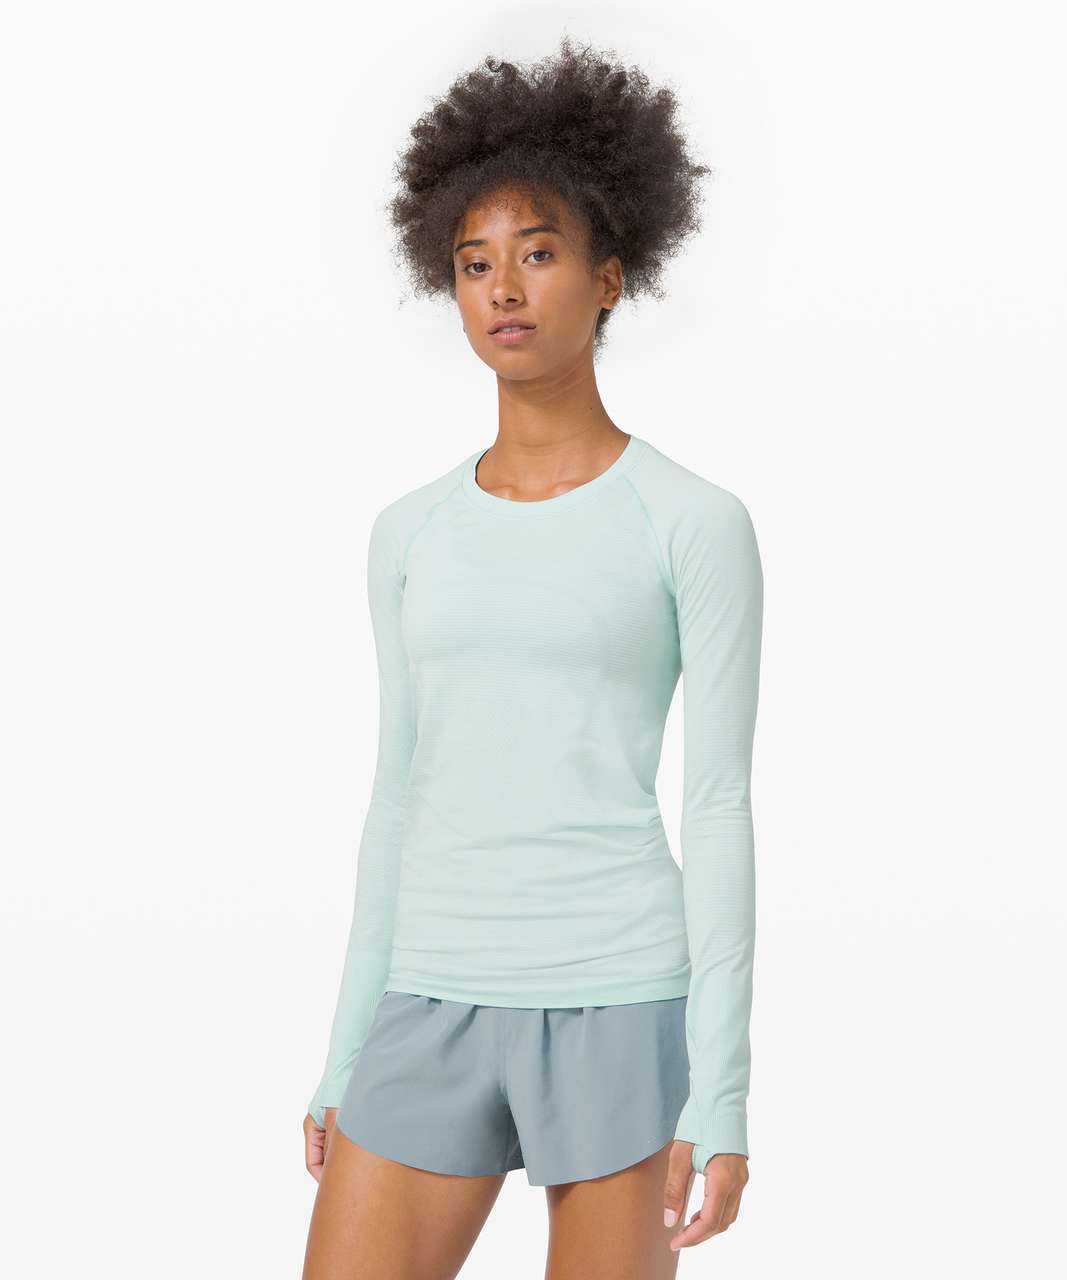 lululemon athletica Swiftly Tech Long Sleeve Shirt 2.0 in Blue